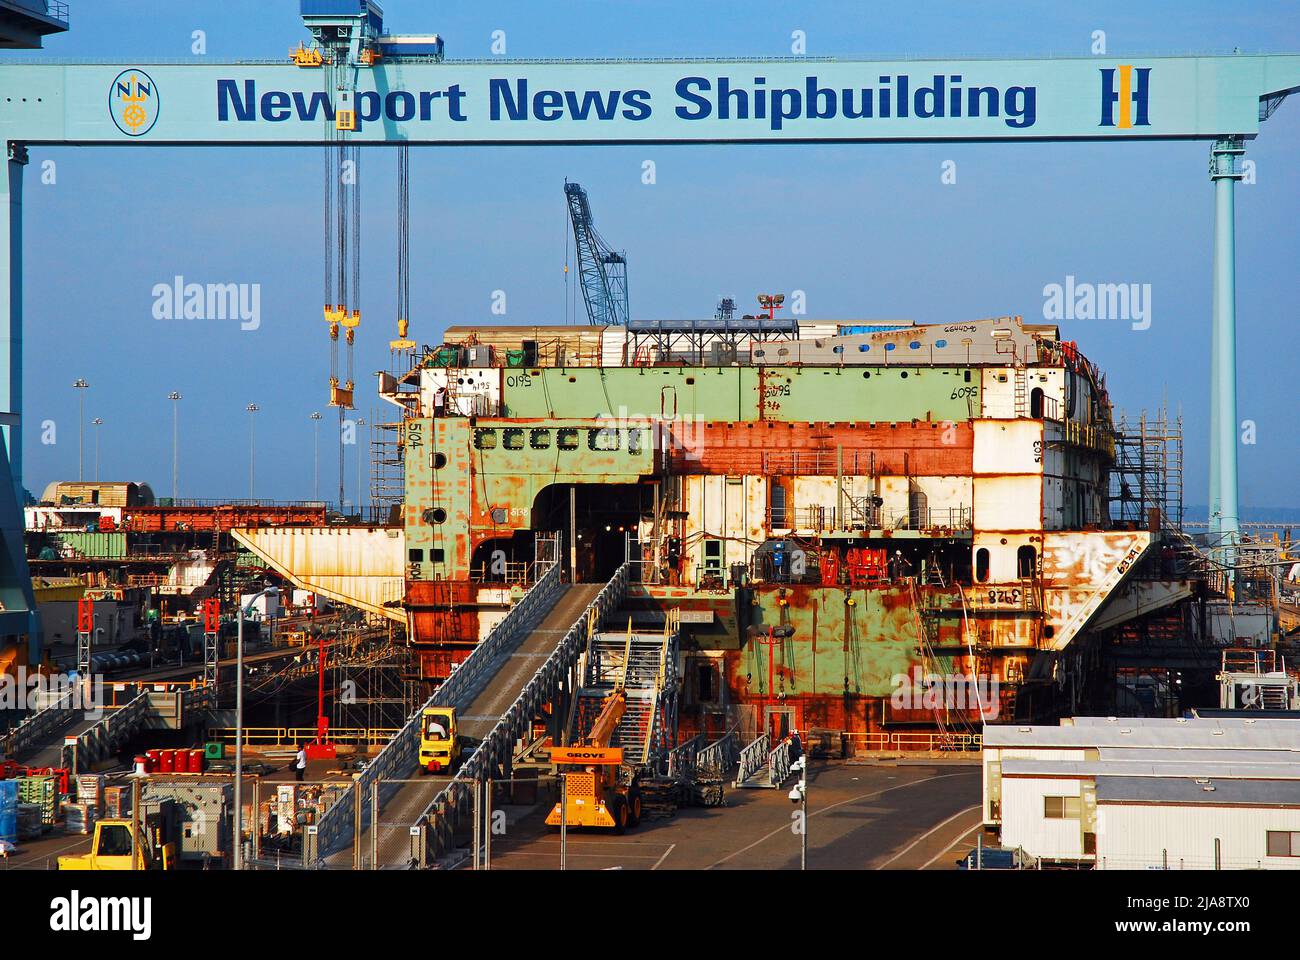 A shipbuilding center in Newport News, Virginia Stock Photo